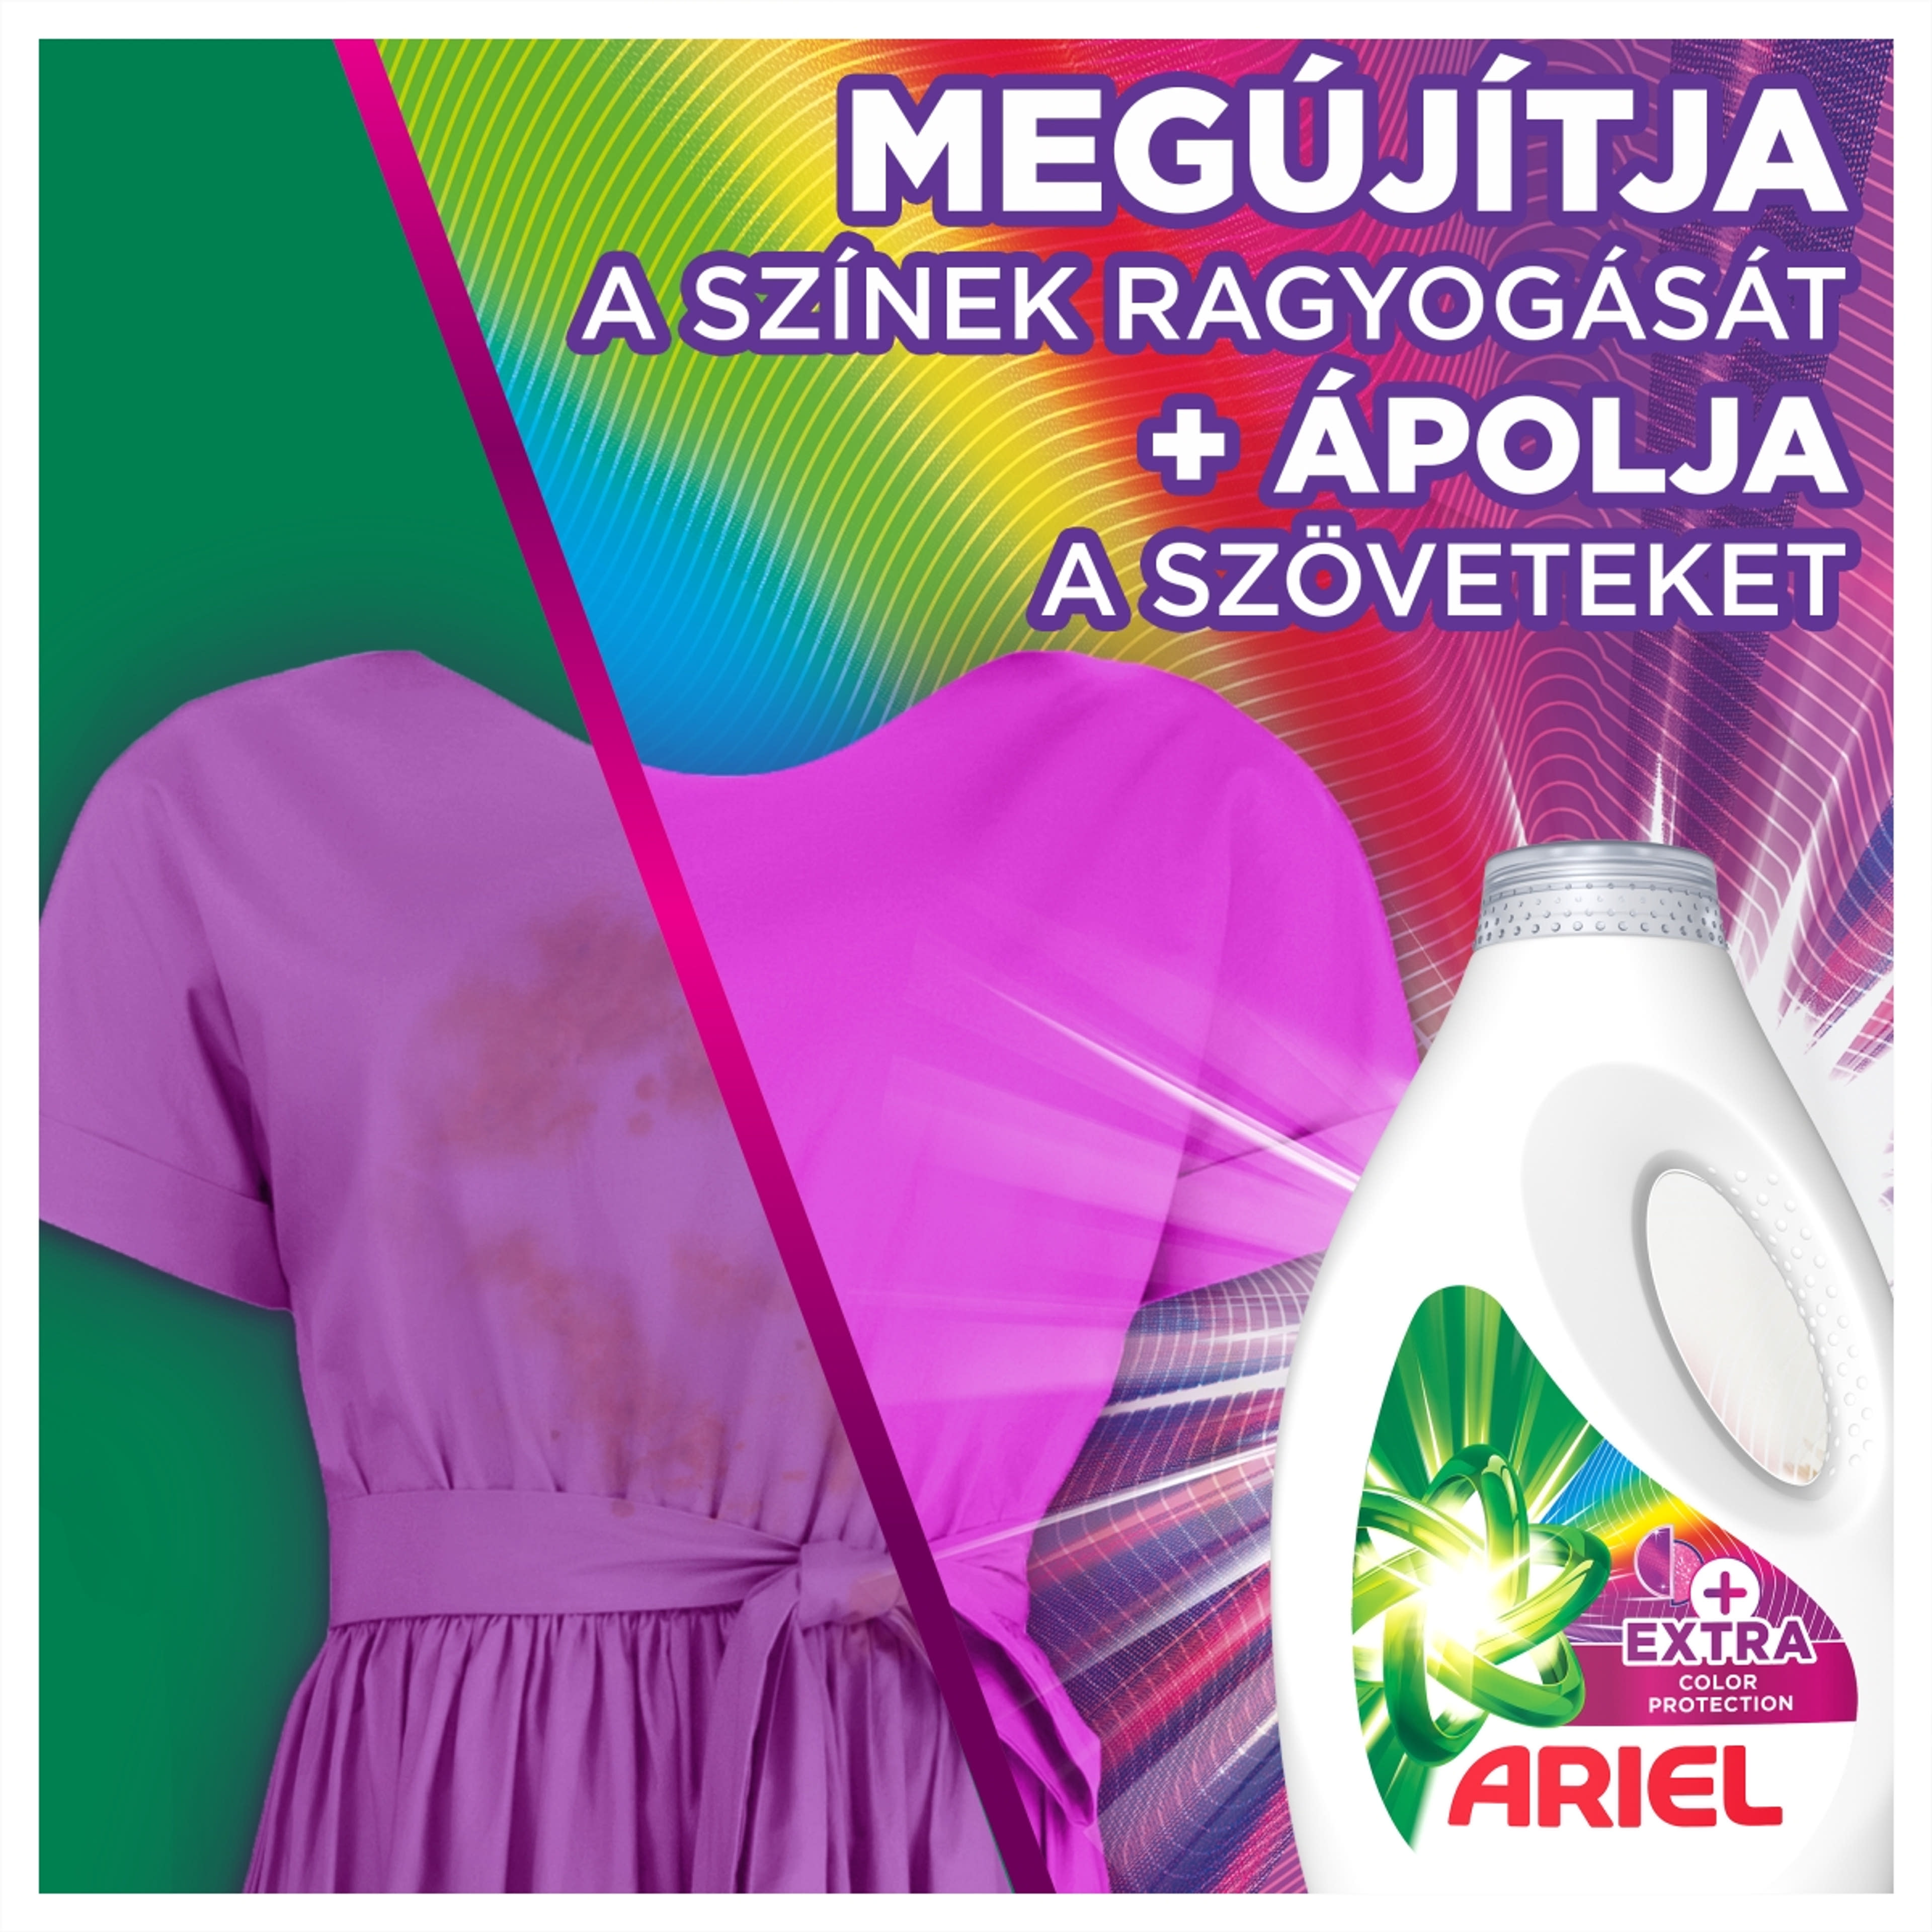 Ariel Complete Fiber Protection folyékony mosószer, 64 mosáshoz - 3200 ml-2